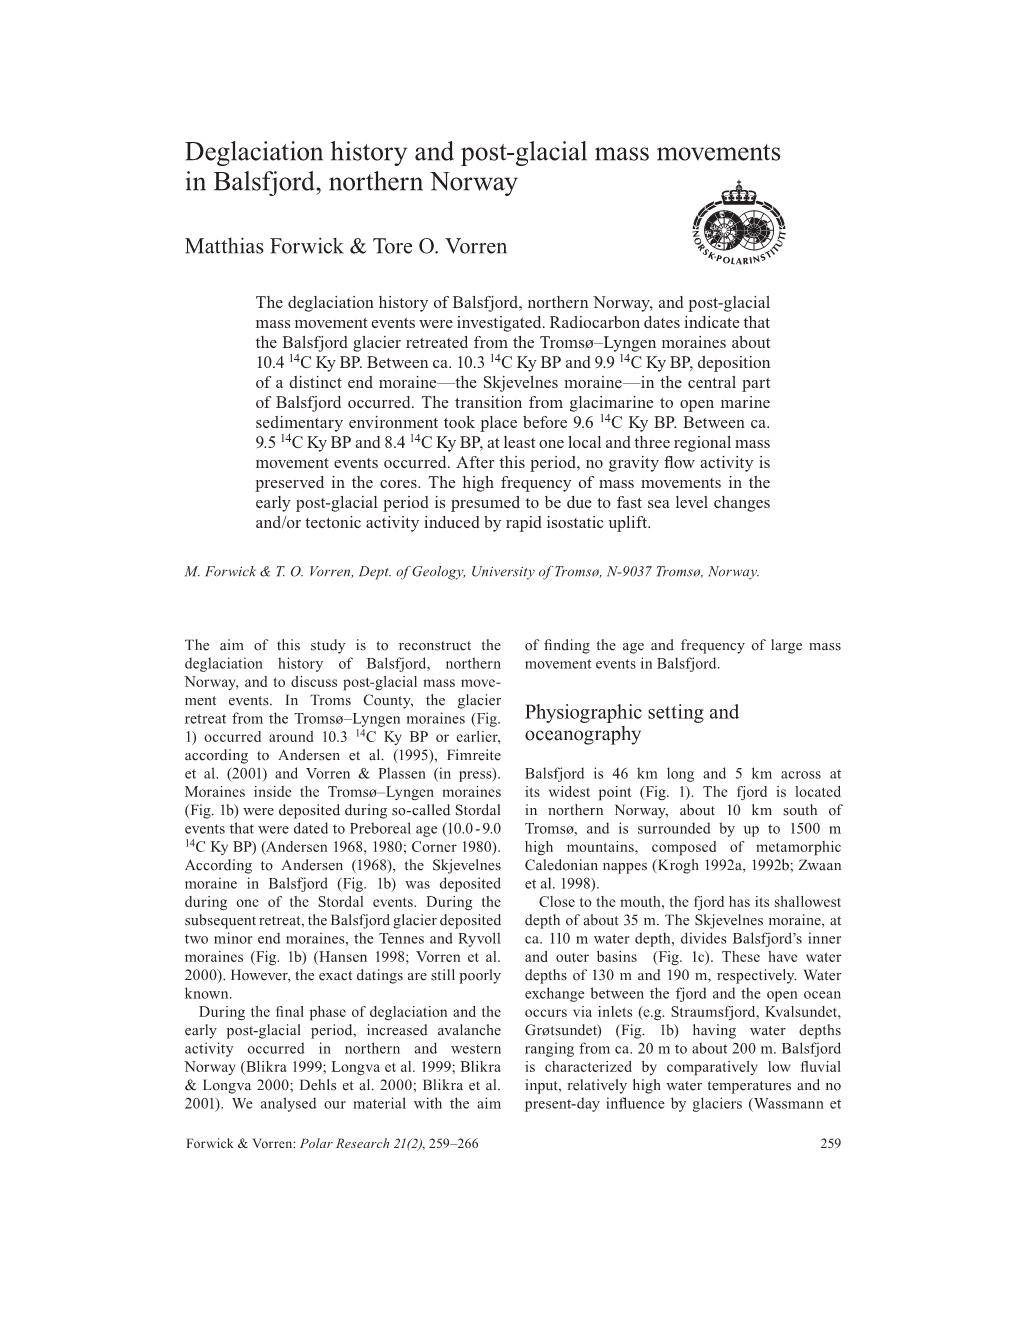 Deglaciation History and Post-Glacial Mass Movements in Balsfjord, Northern Norway